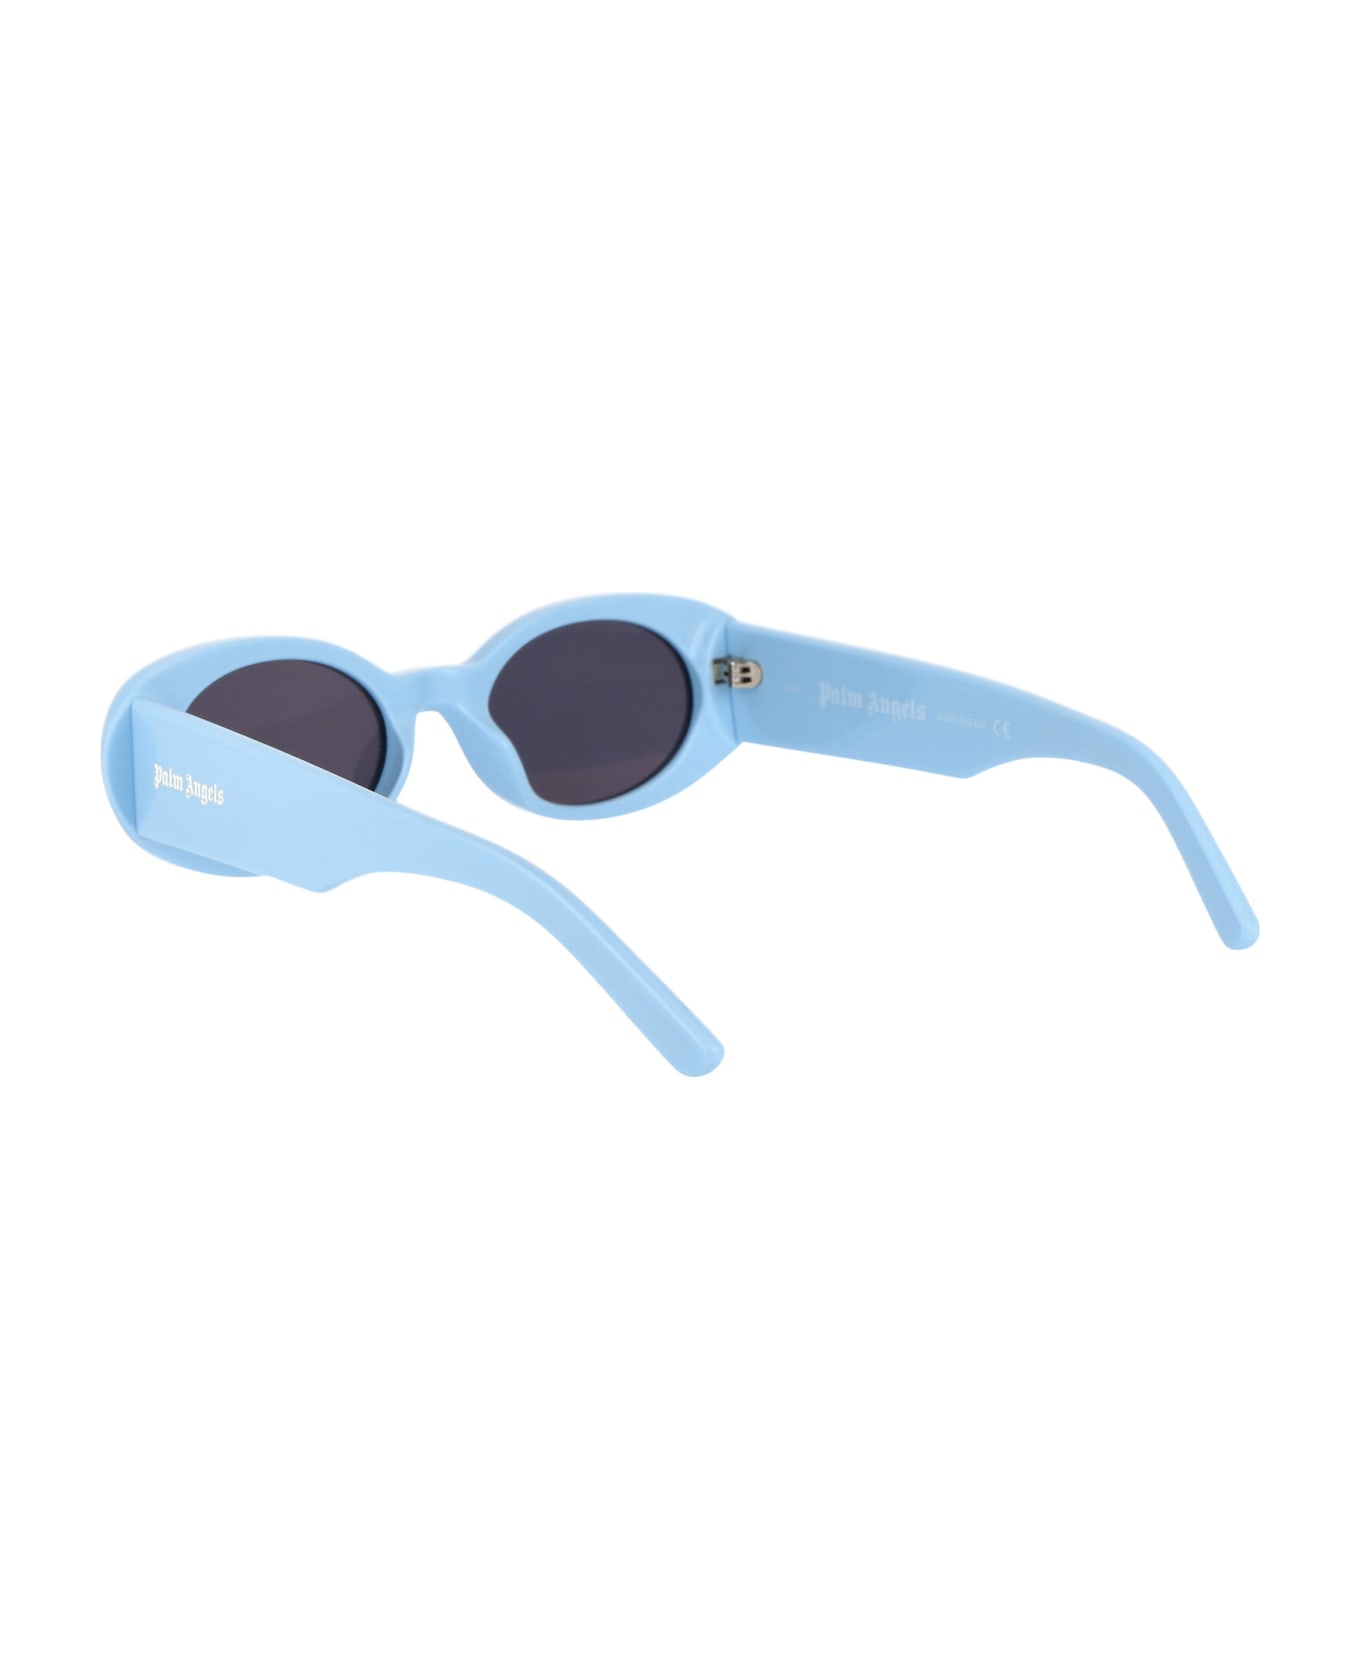 Palm Angels Spirit Sunglasses - 4007 LIGHT BLUE